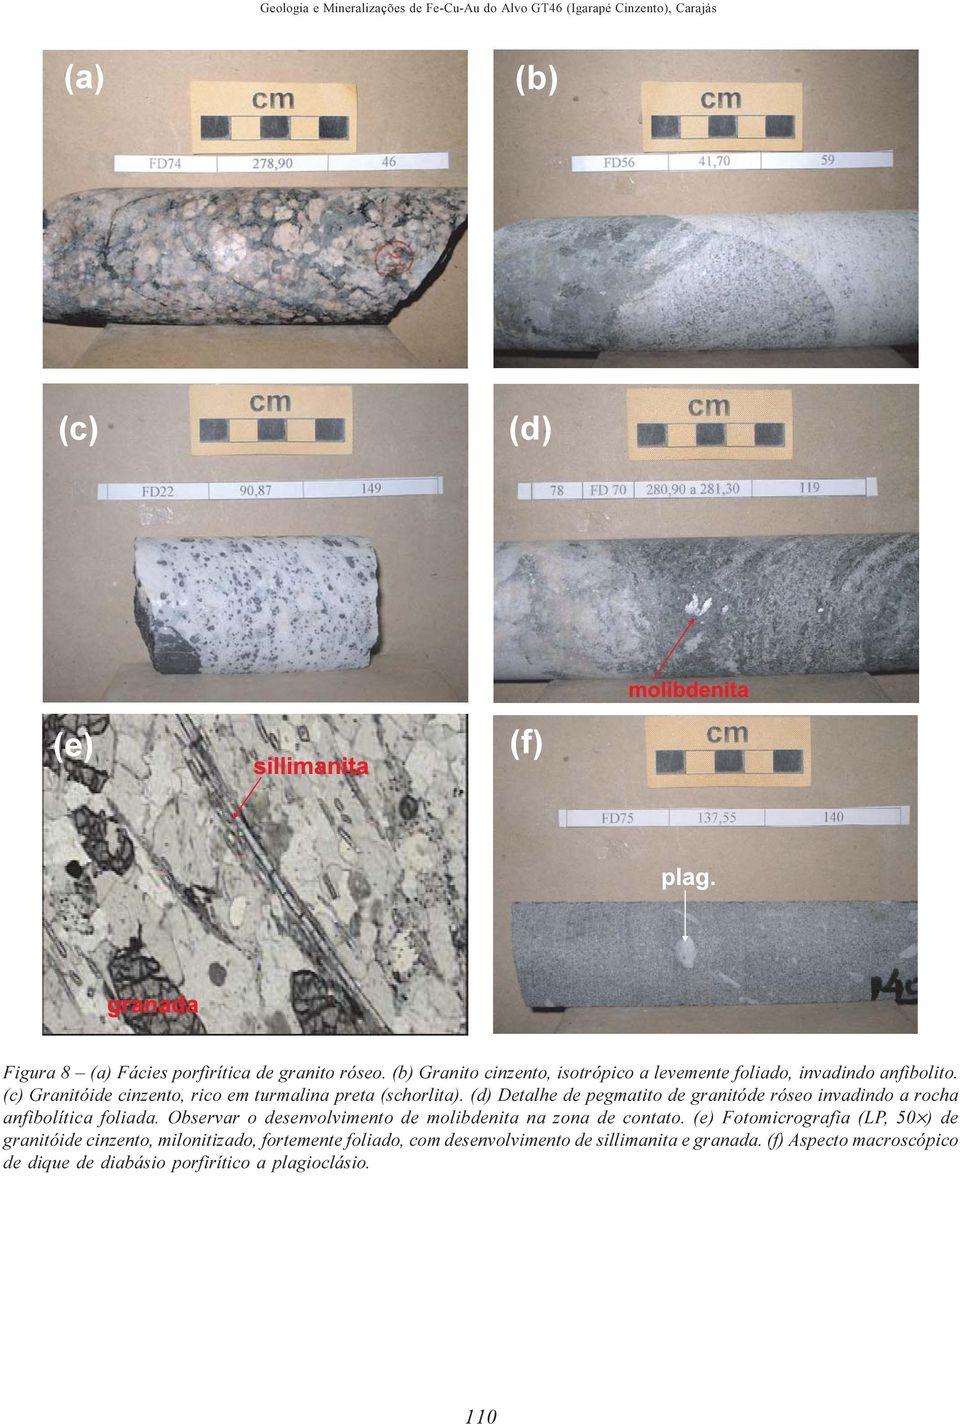 (d) Detalhe de pegmatito de granitóde róseo invadindo a rocha anfibolítica foliada. Observar o desenvolvimento de molibdenita na zona de contato.